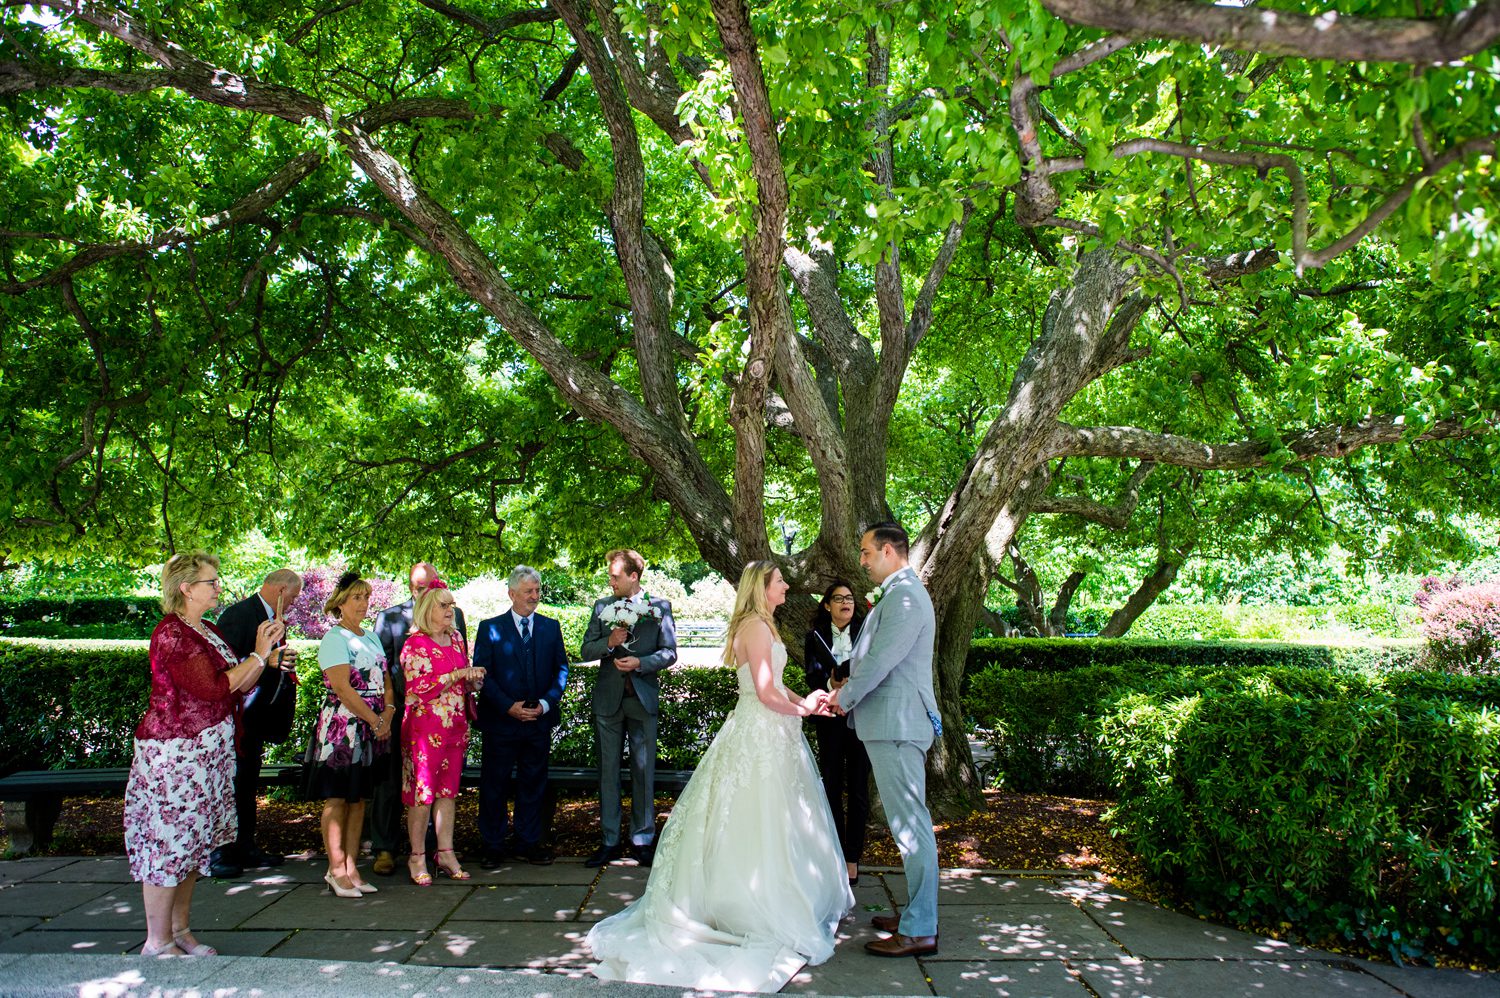 Conservatory Garden Central Park Wedding Ceremony